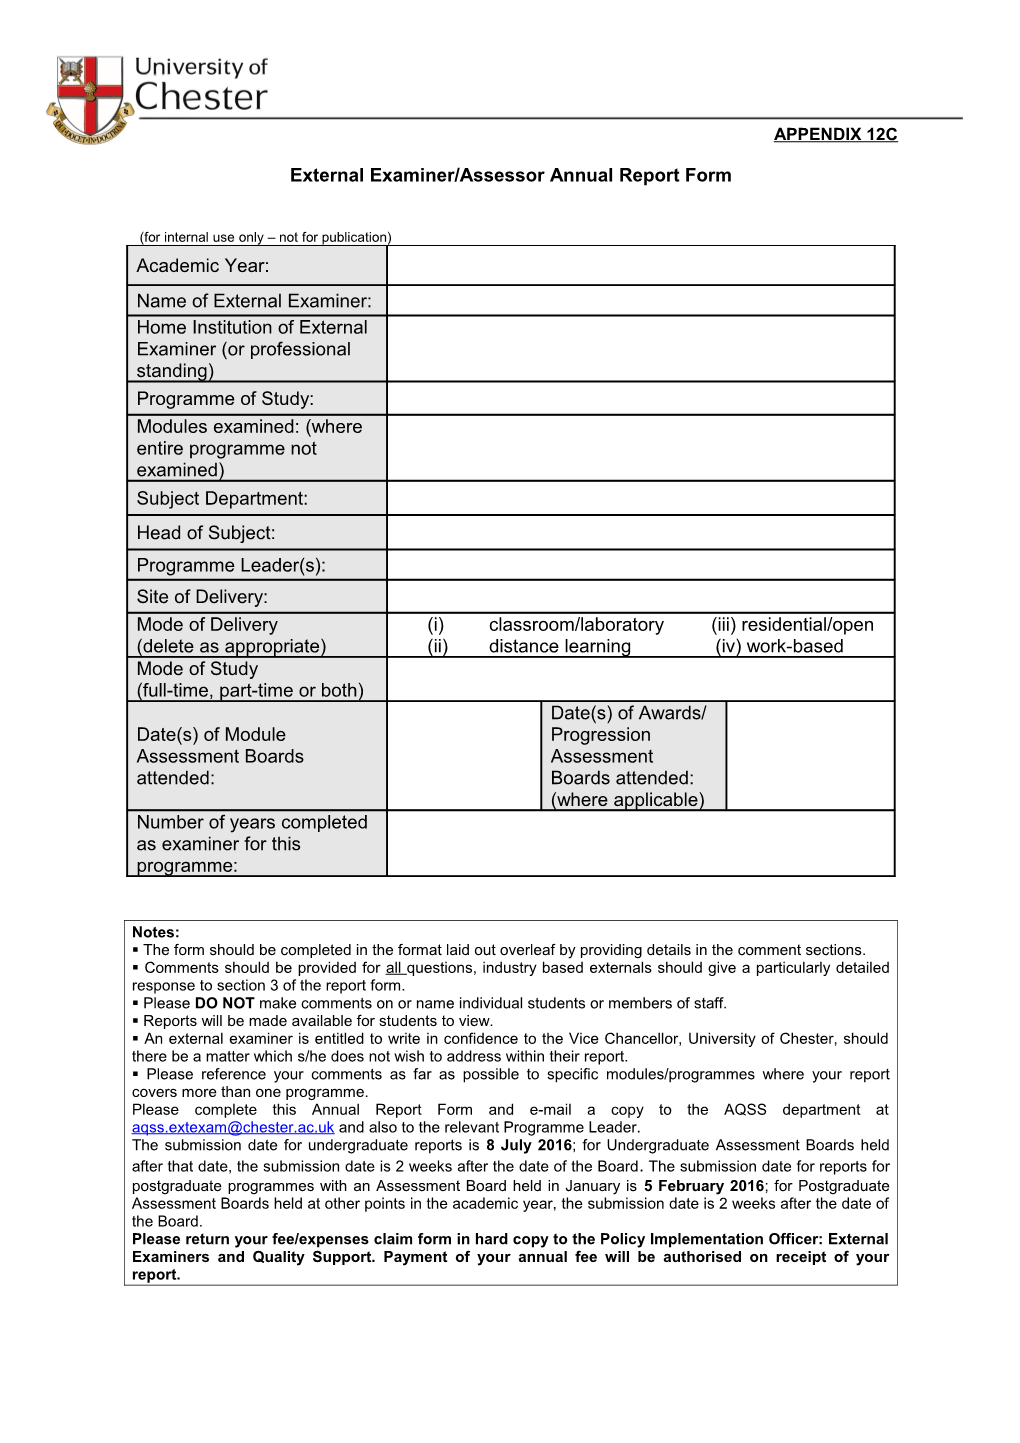 External Examiner/Assessor Annual Report Form